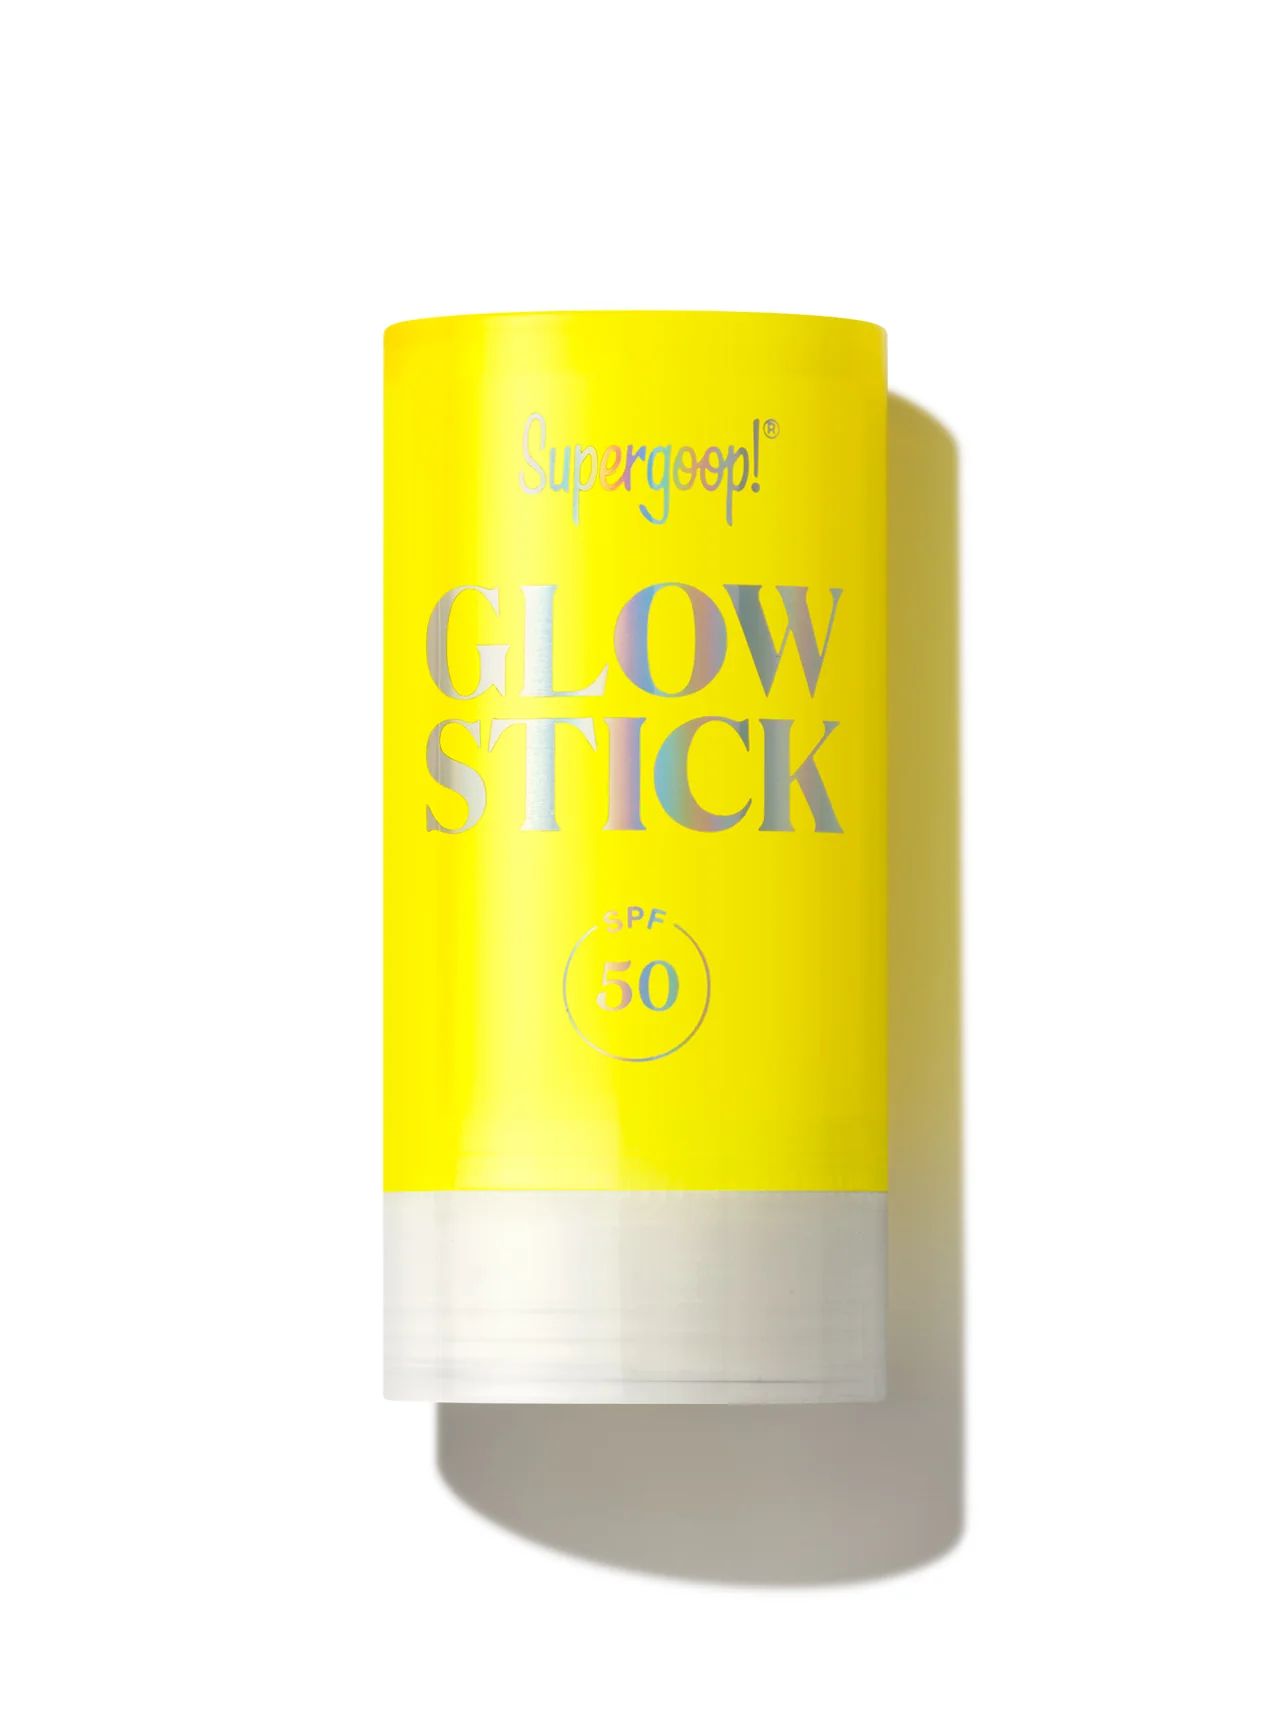 Glow Stick Sunscreen and Highlighter SPF 50 | Supergoop